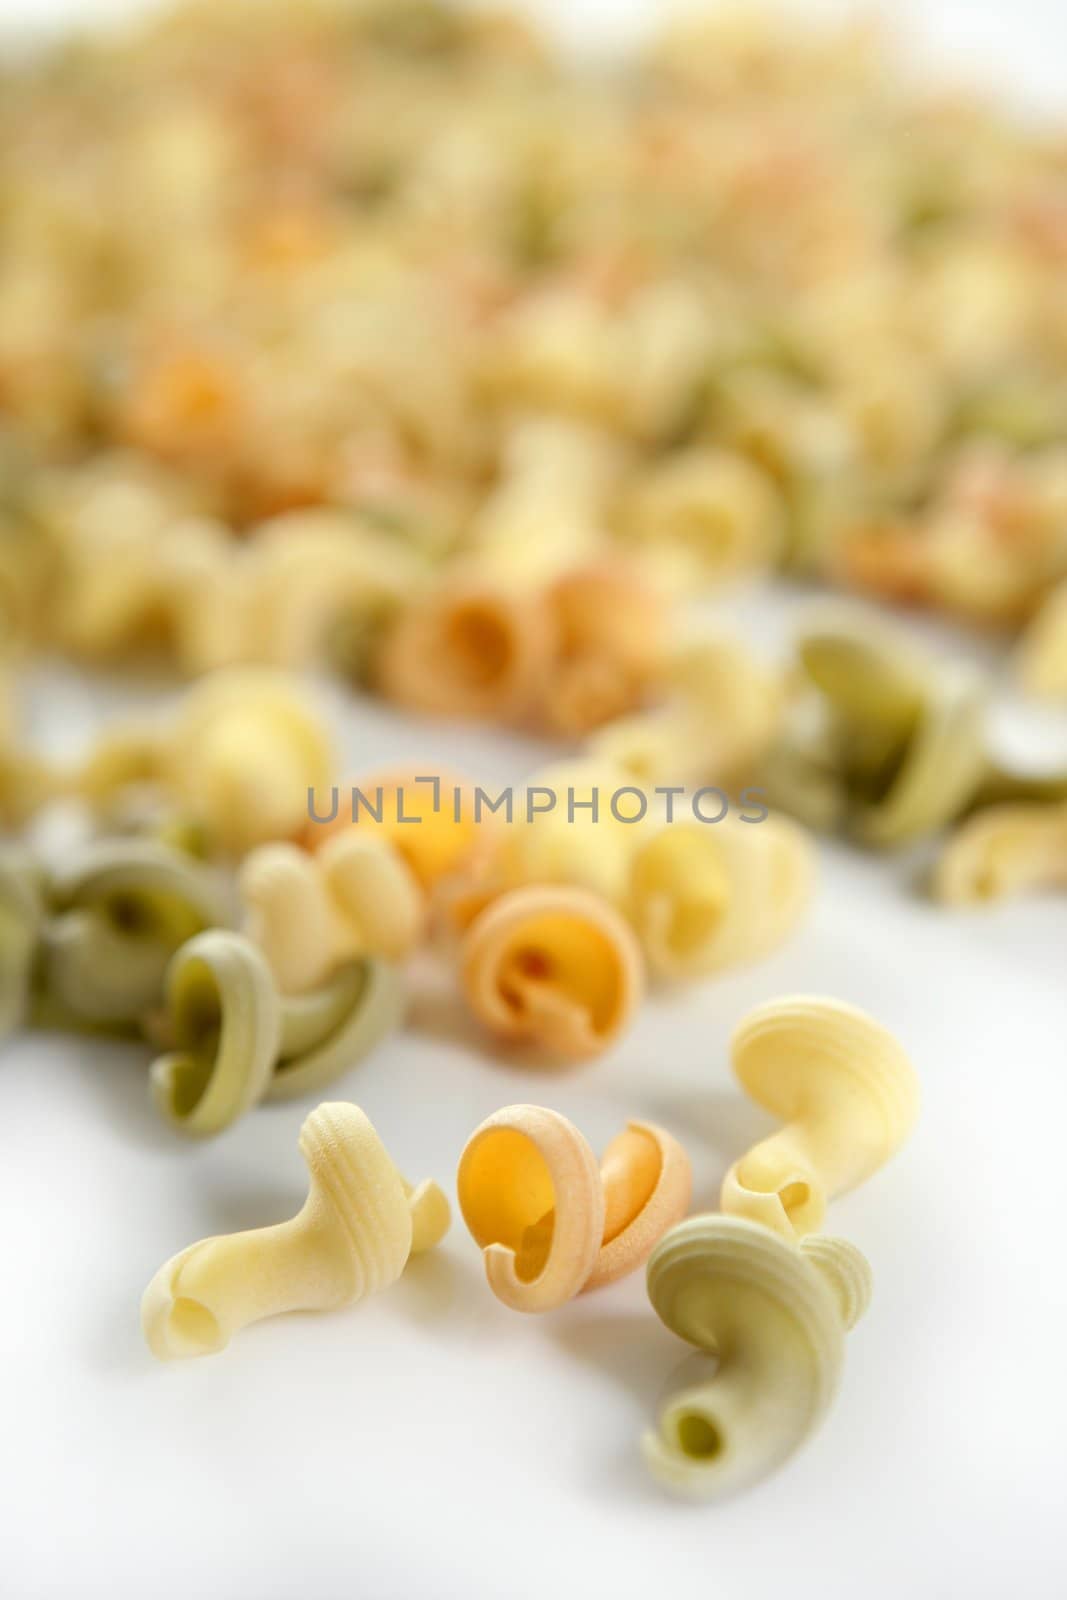 Twisty snail shape, Italian multicolor pasta texture